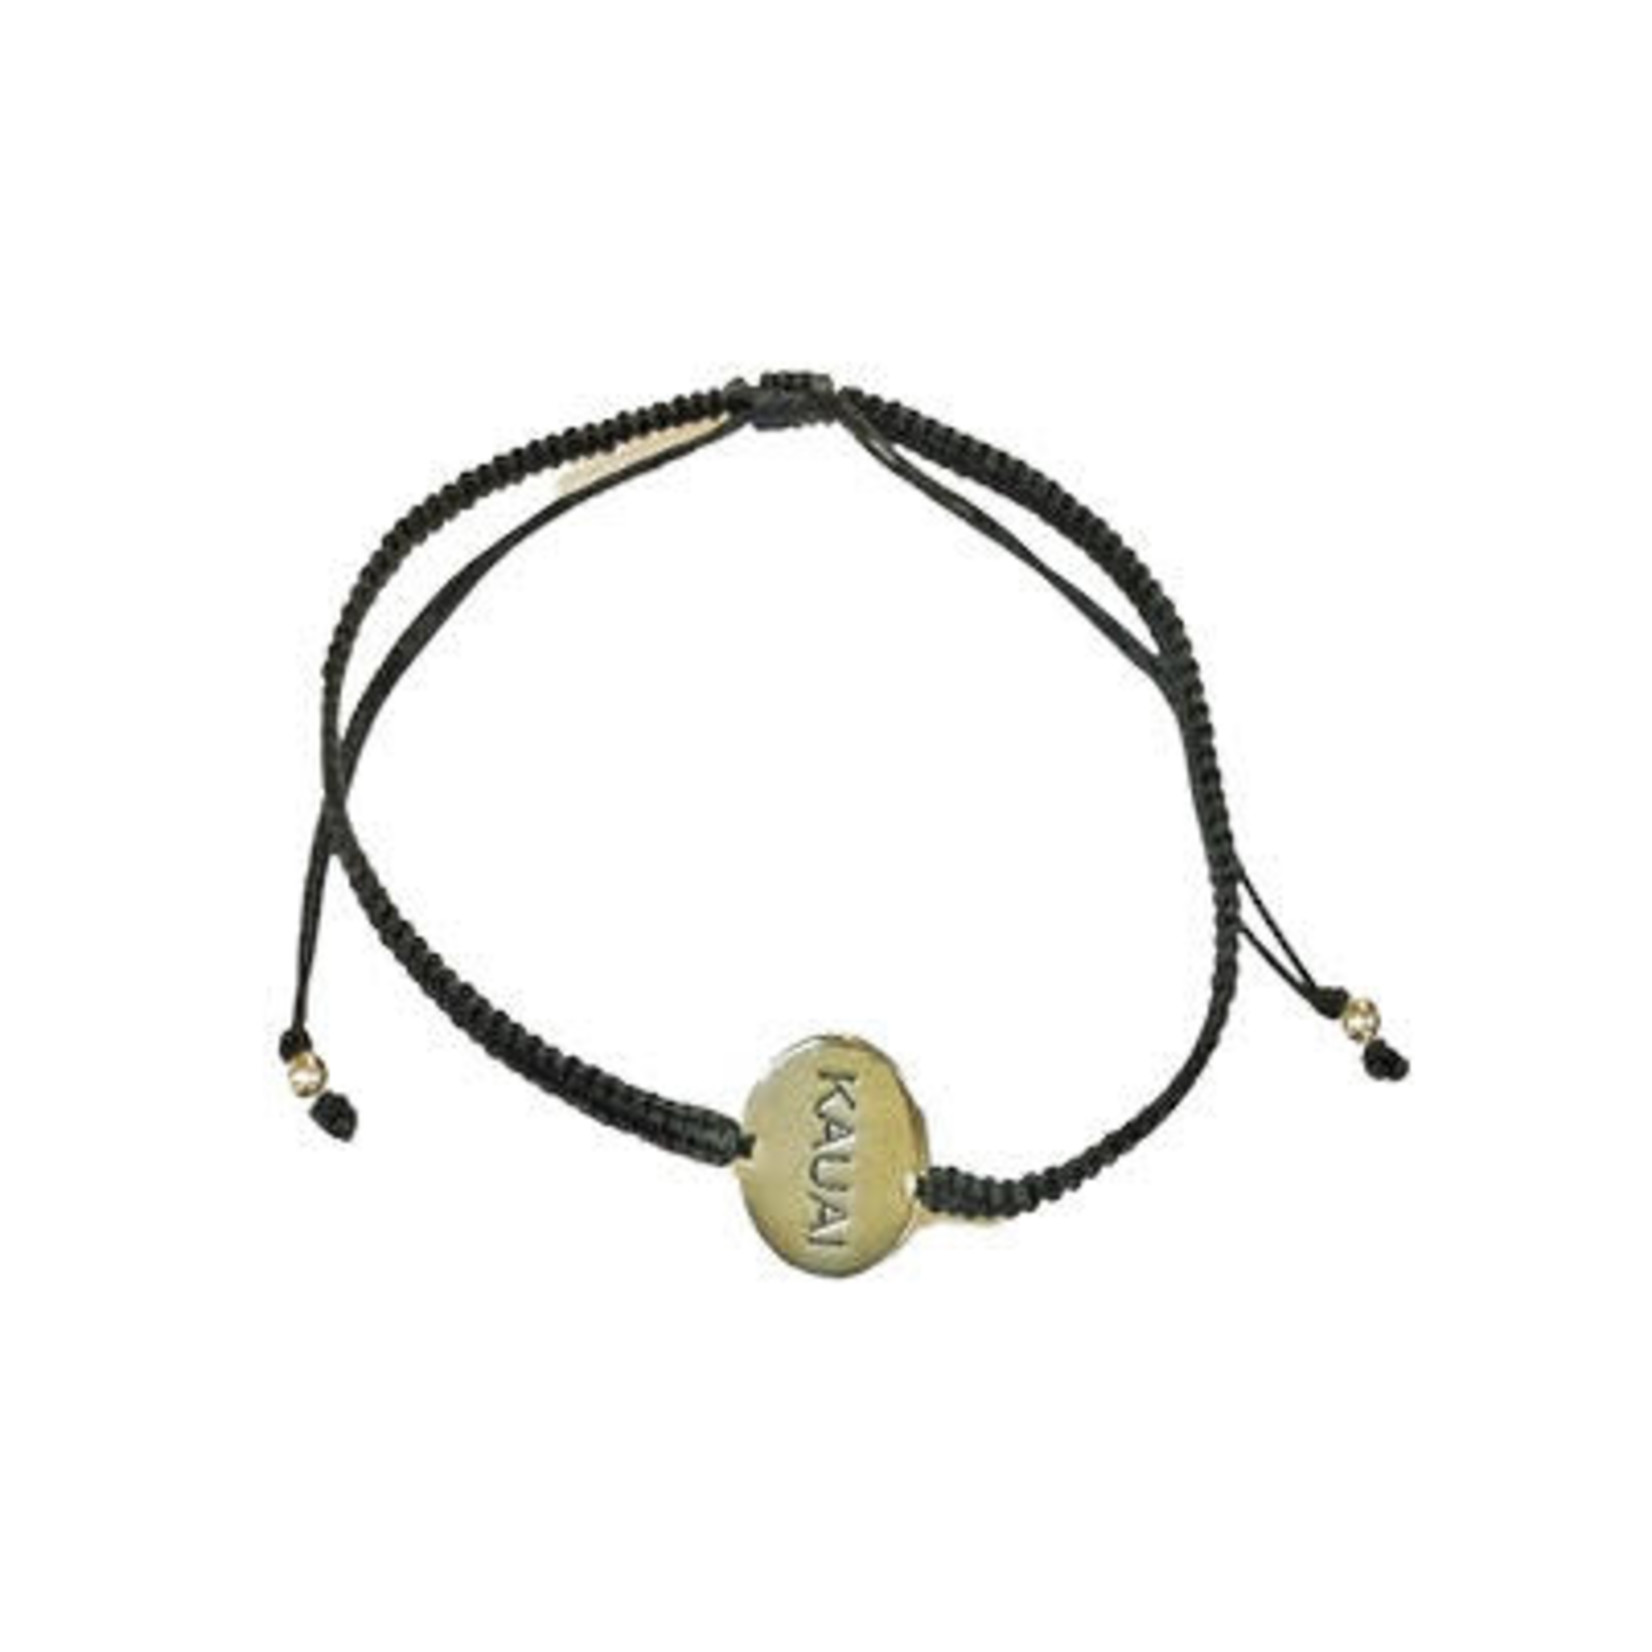 Adjustable String Bracelet with Silver Charm Kauai